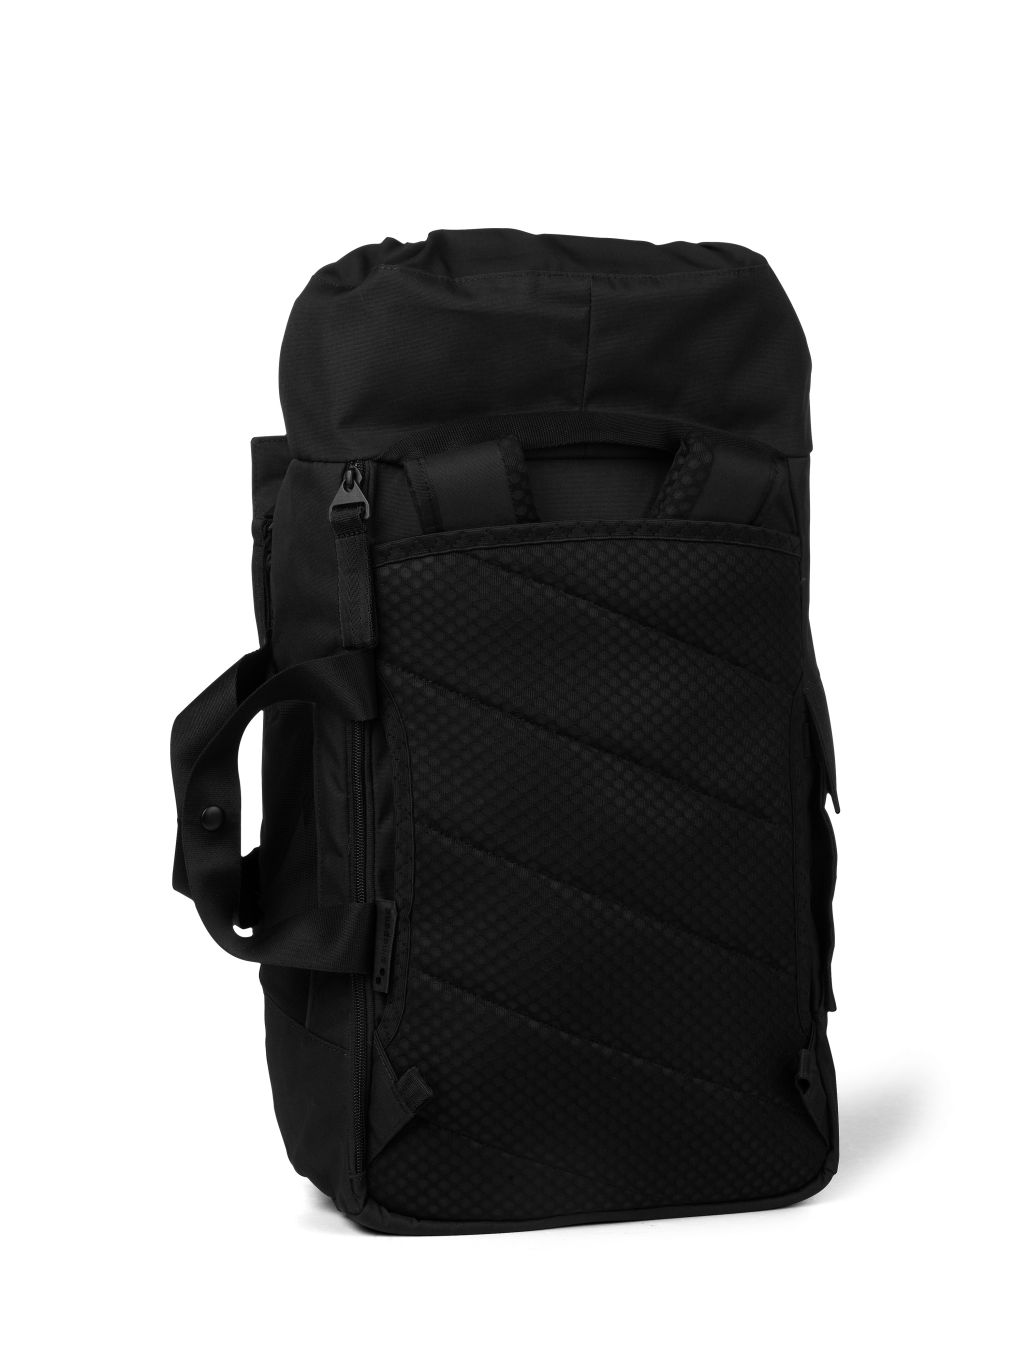 BLOK medium Backpack construct black